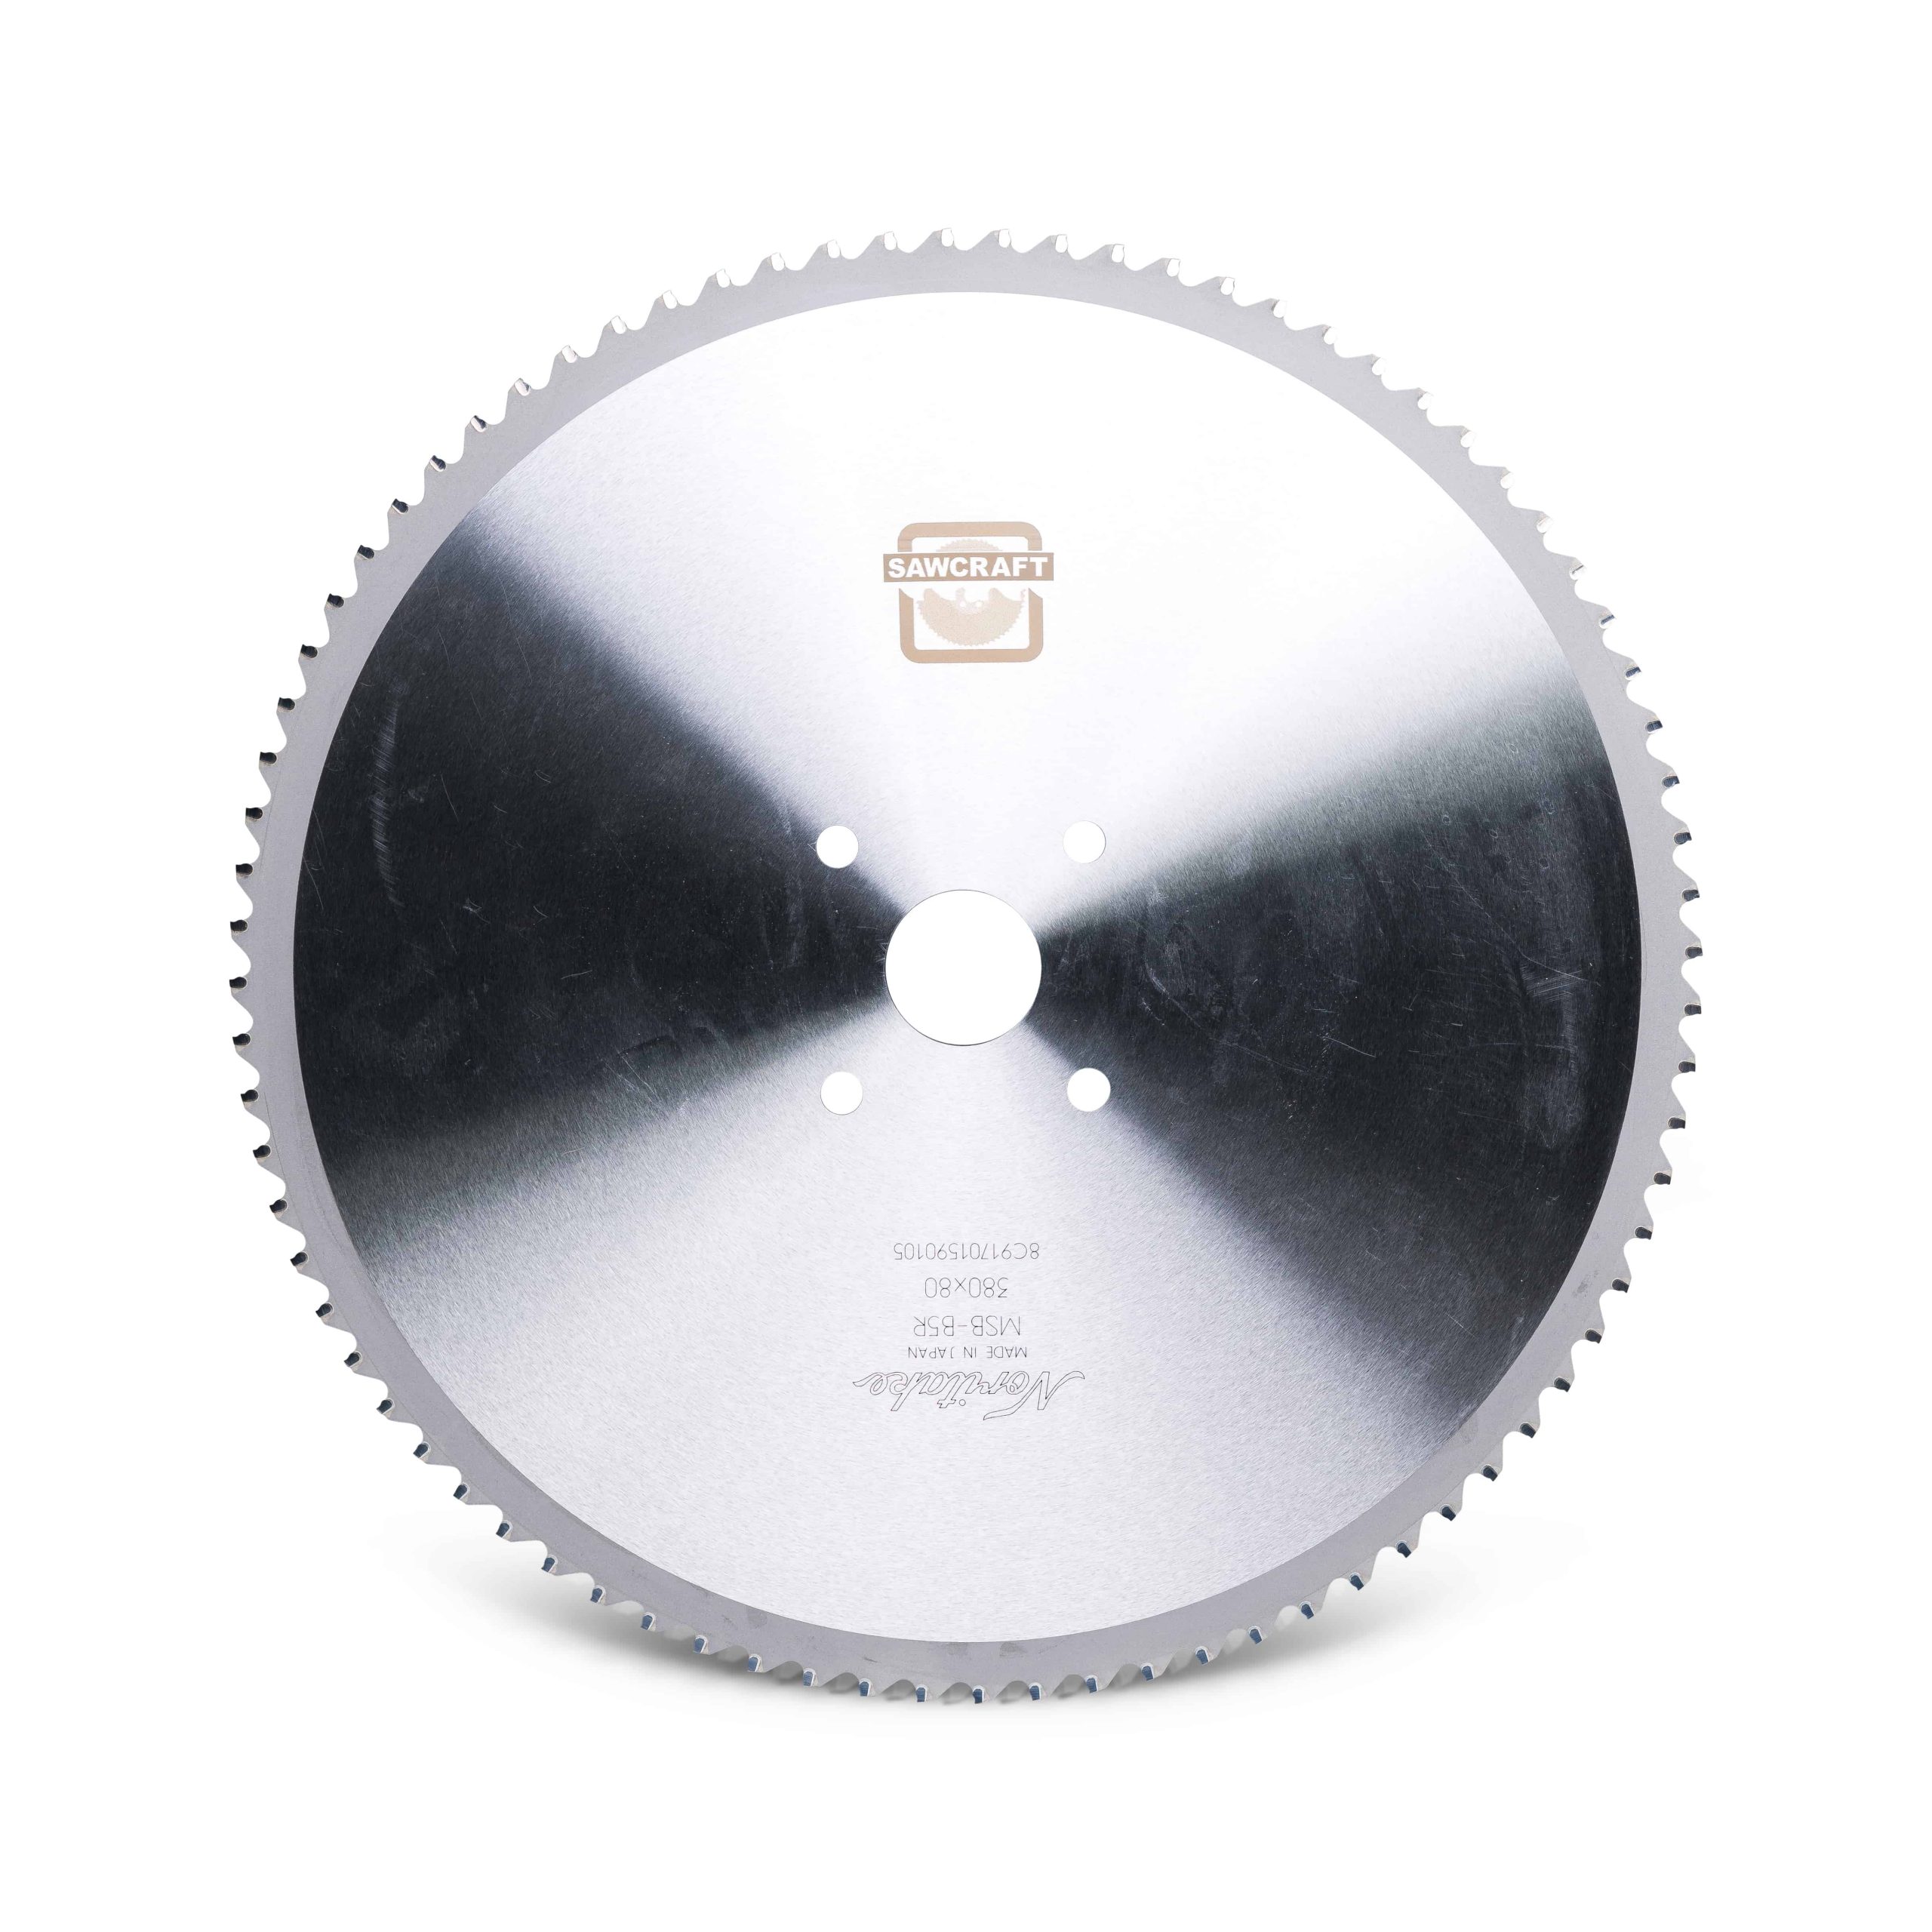 Noritake high production circular saw blades